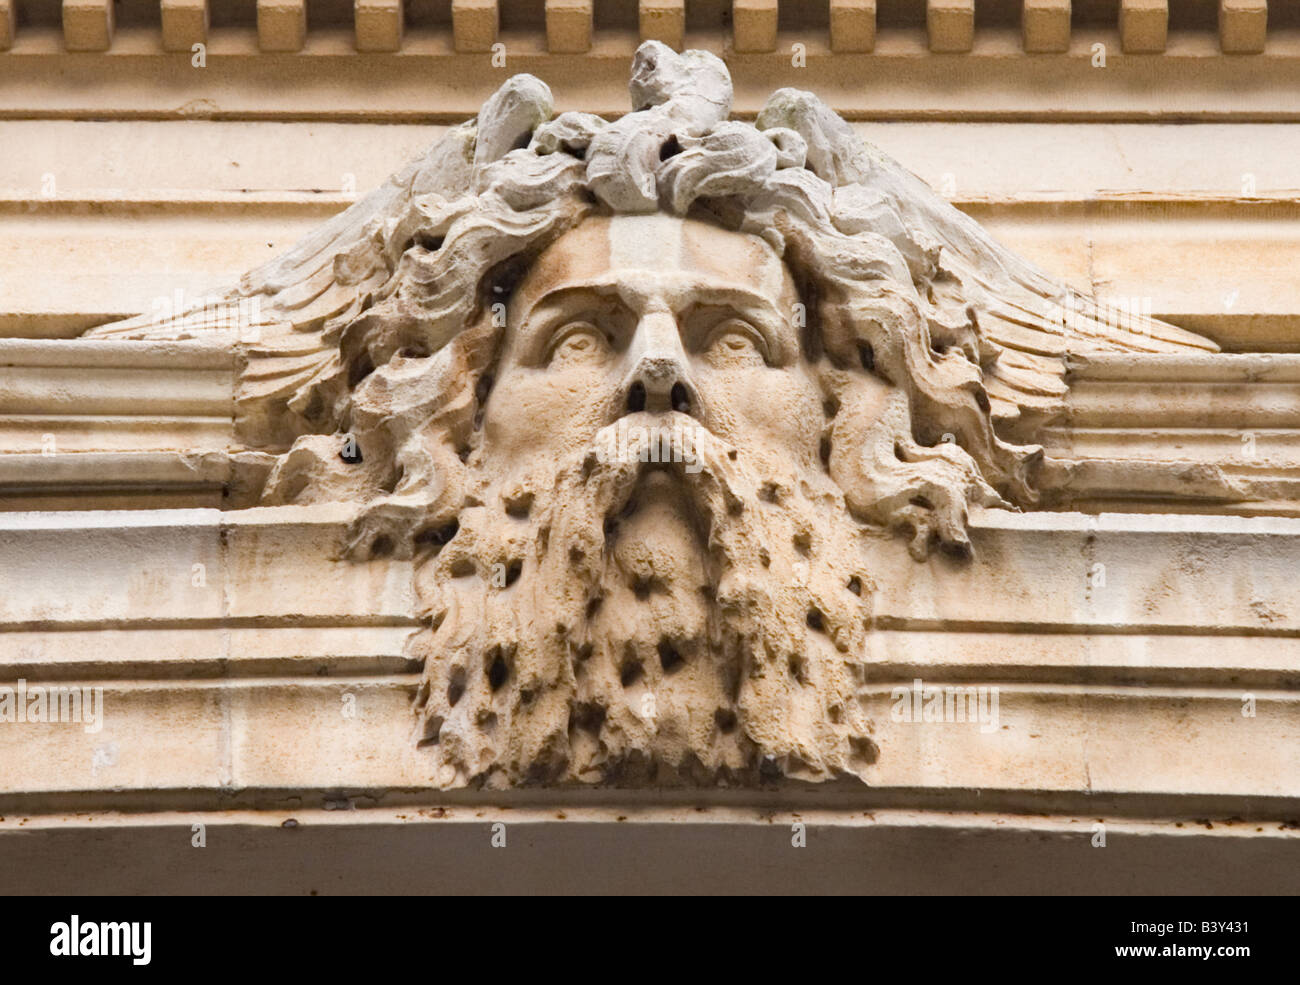 Sculpted head of a bearded man in a winged helmet.  York Street, Bath, England, UK Stock Photo